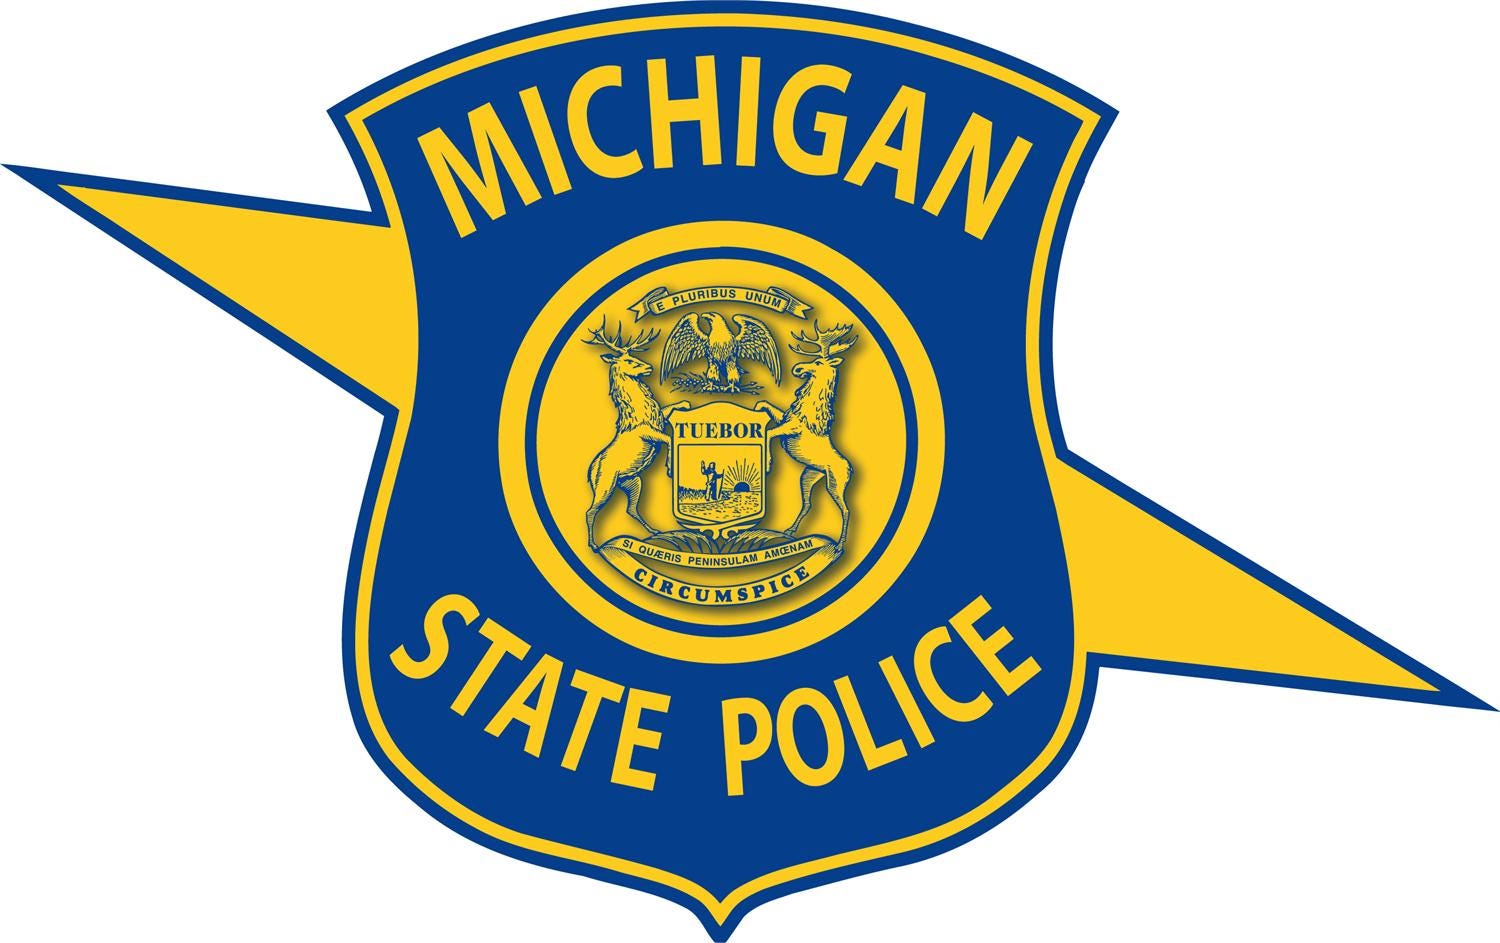 Michigan State Police logo